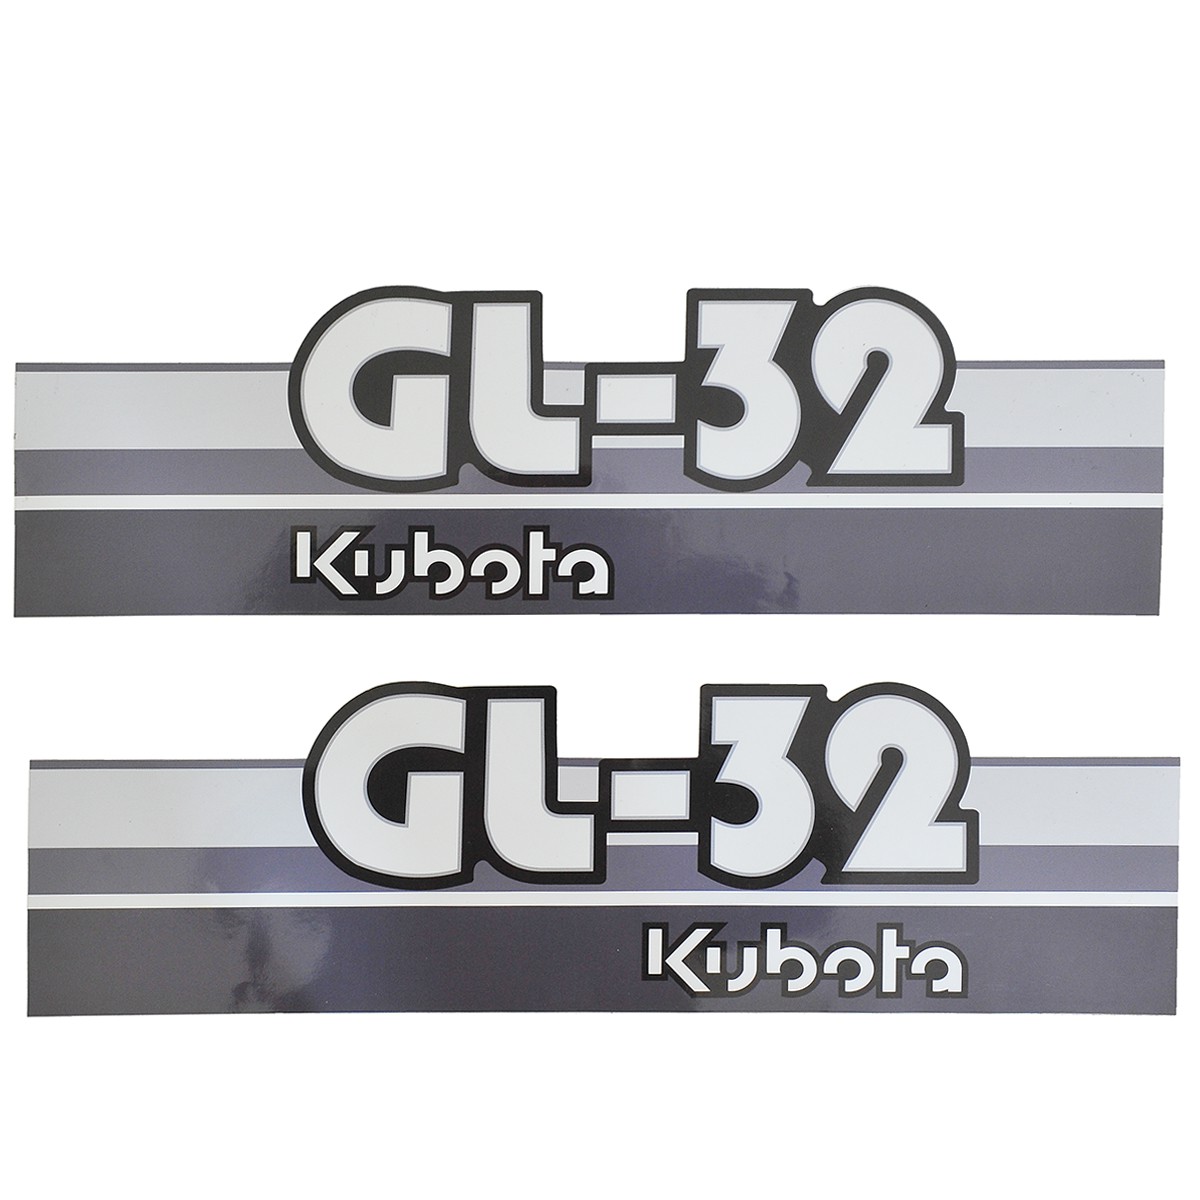 Kubota GL32 stickers